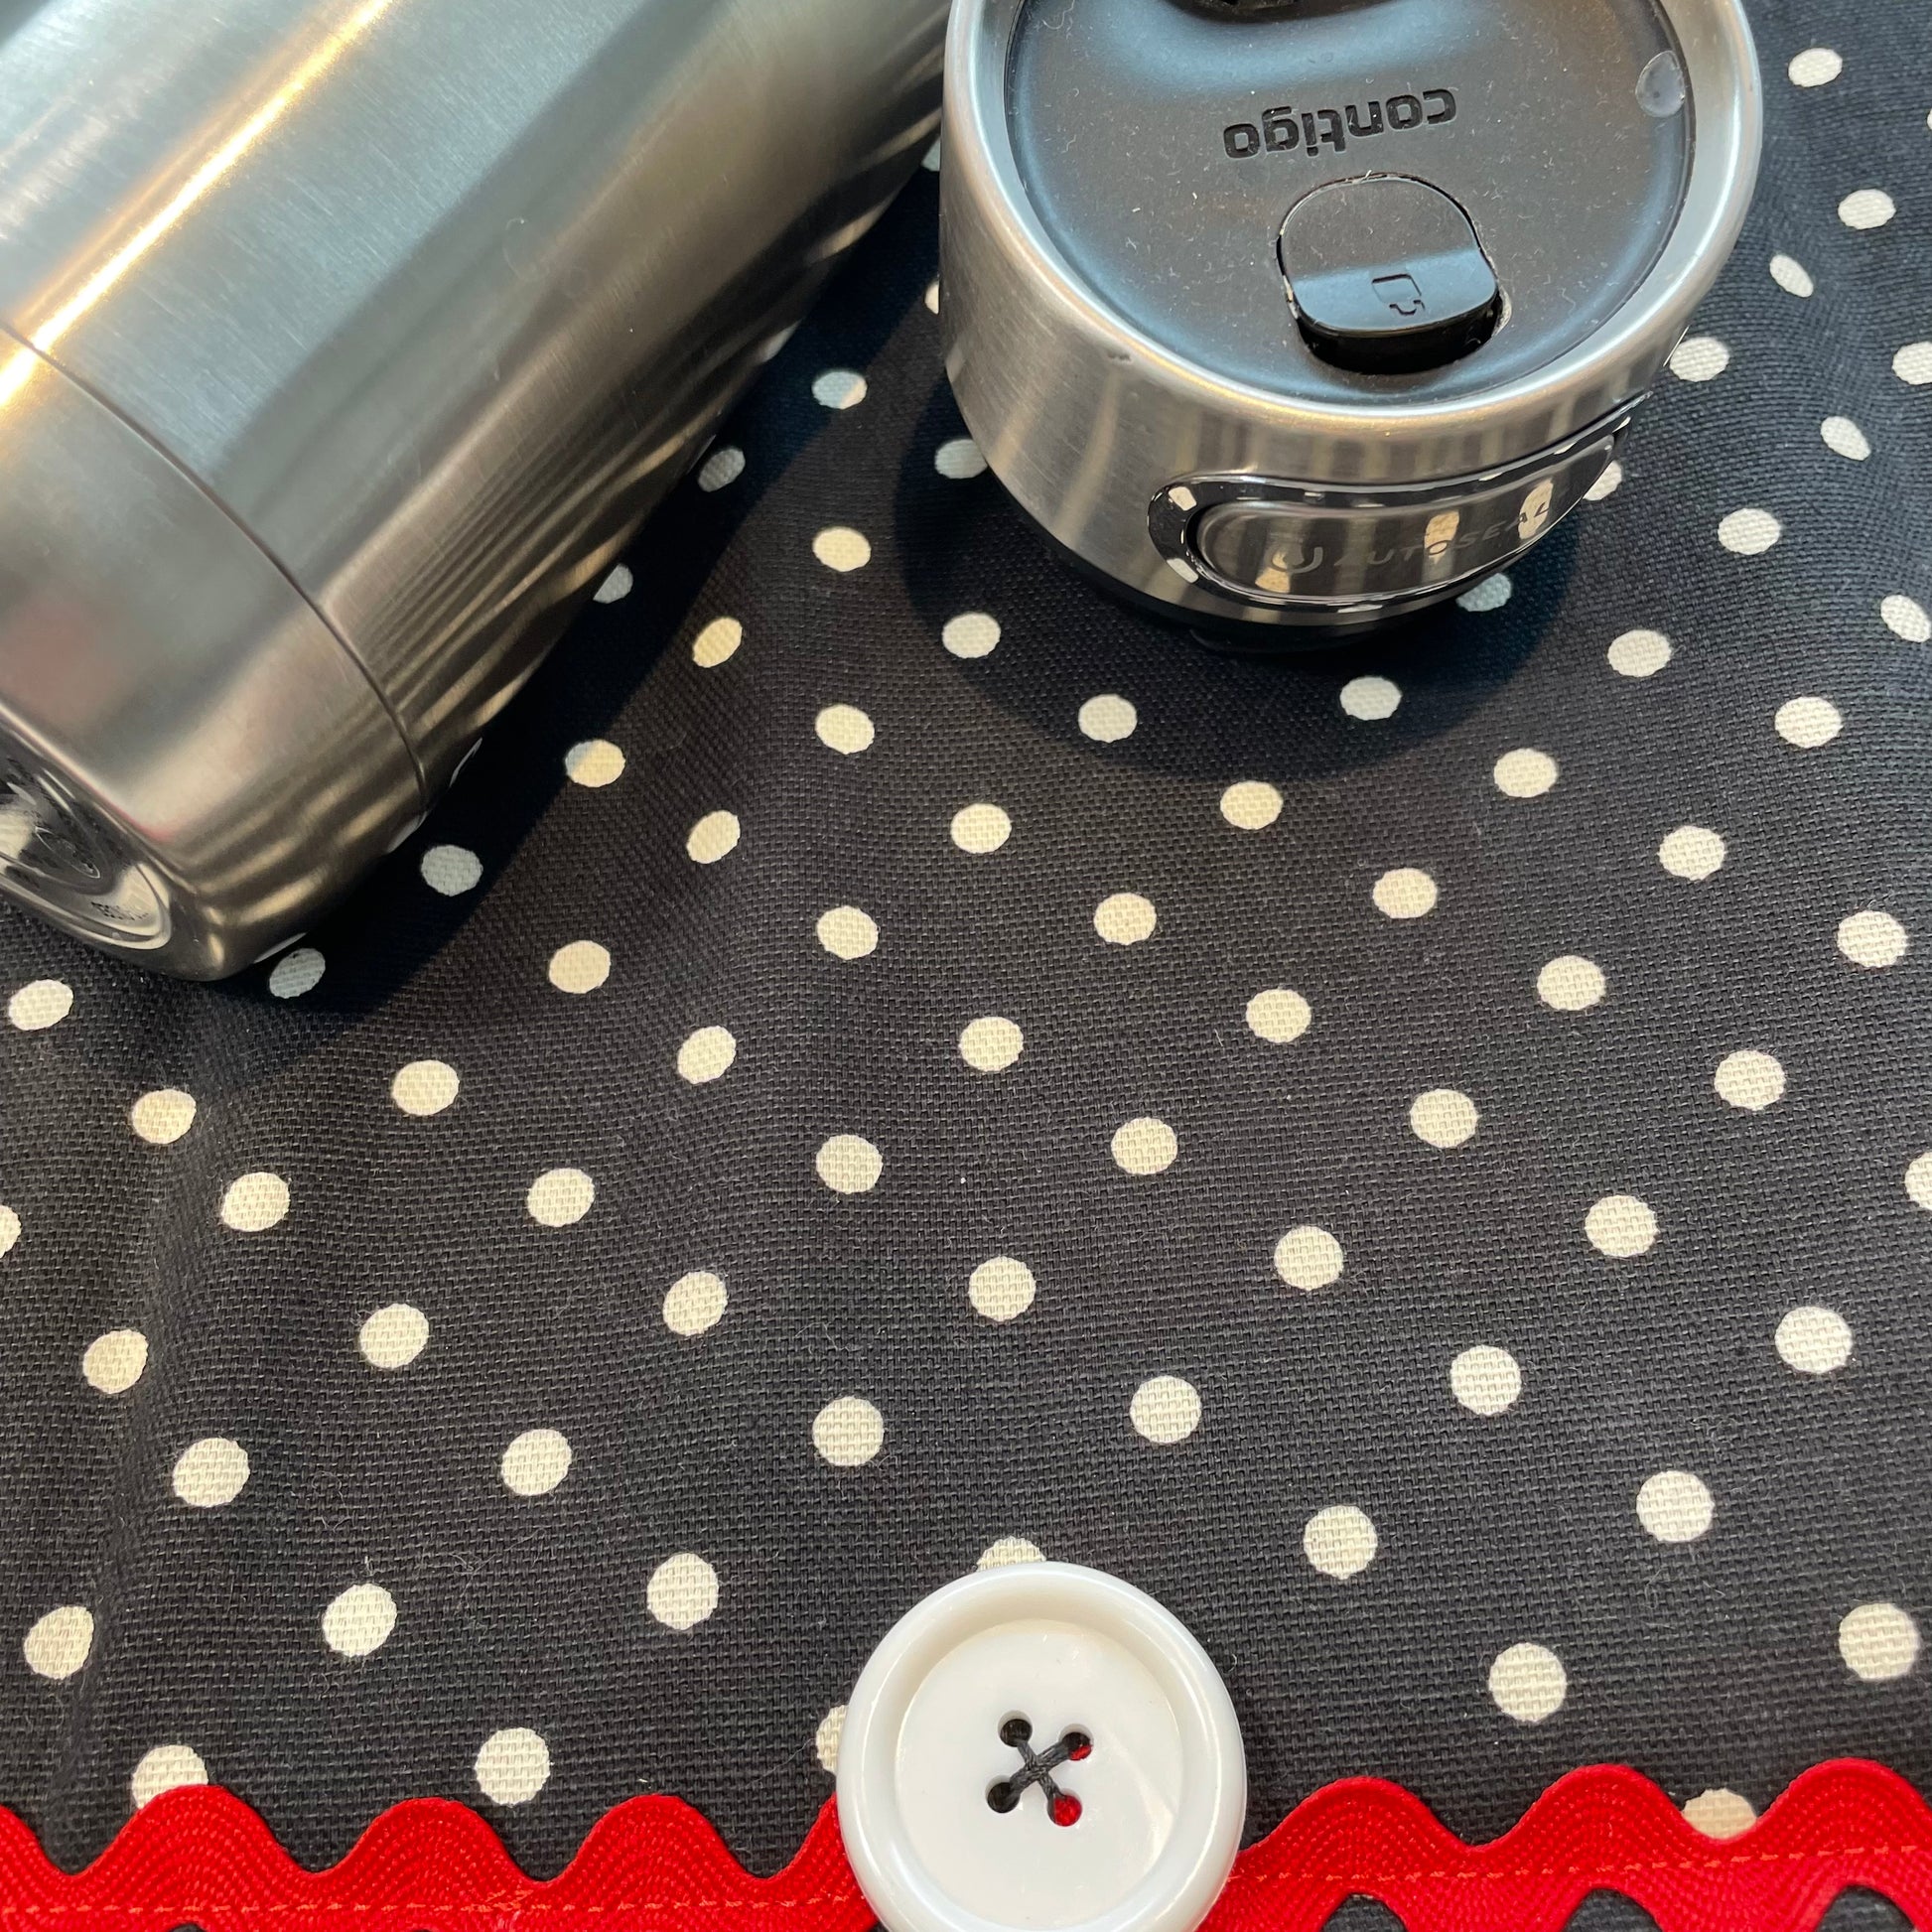 Red and Black Retro Polka Dot Kitchen Dish Drying Mat. Glamping Dishma –  Home Stitchery Decor